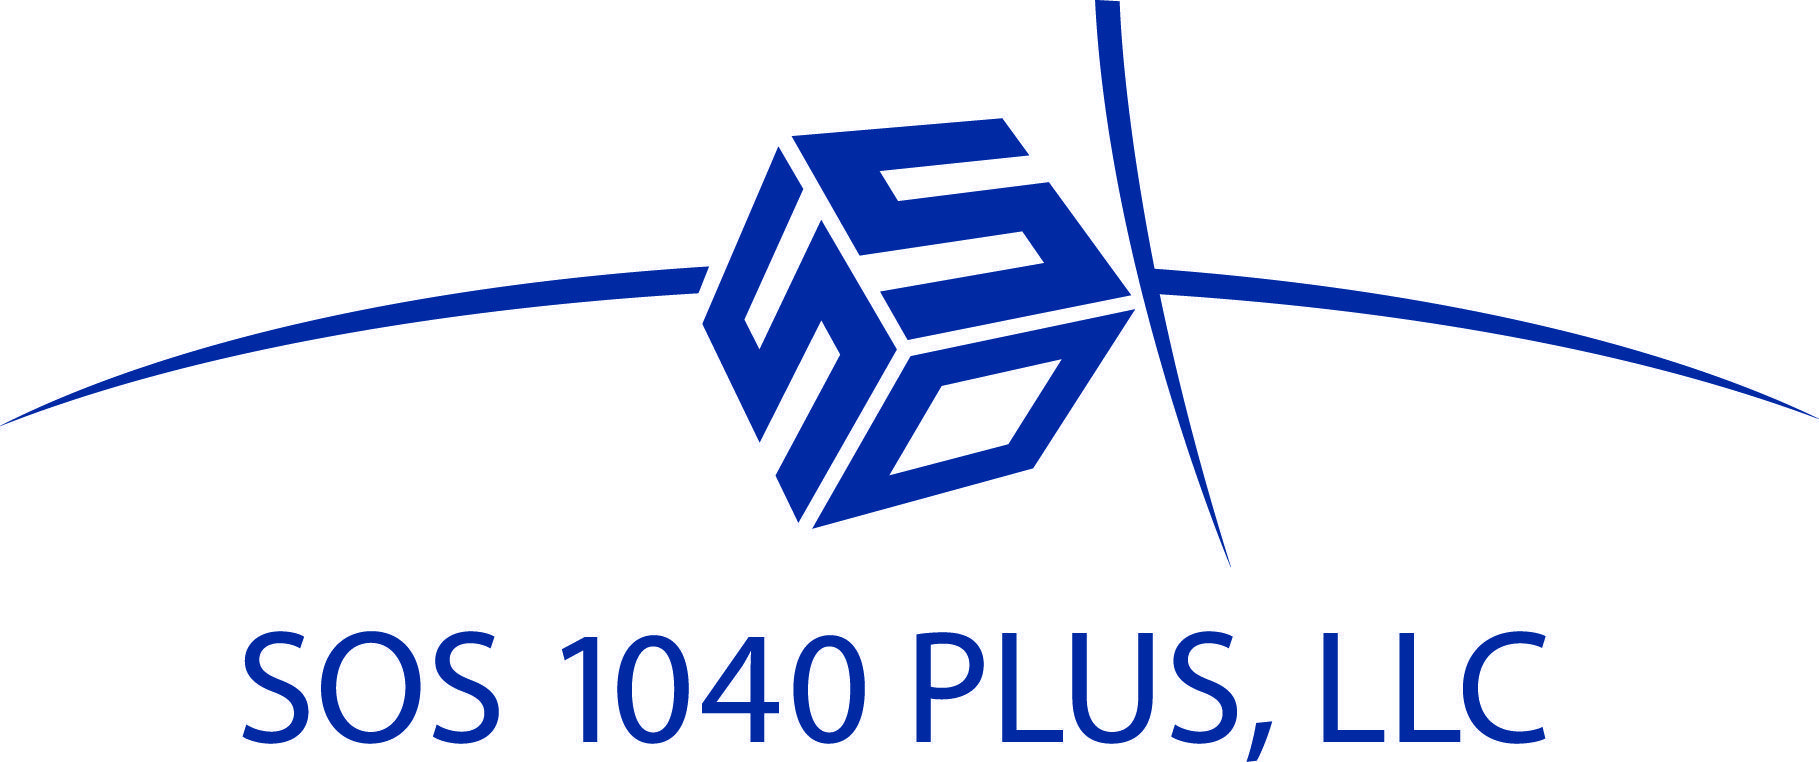 1040 Logo - SOS 1040 PLUS, LLC | Better Business Bureau® Profile